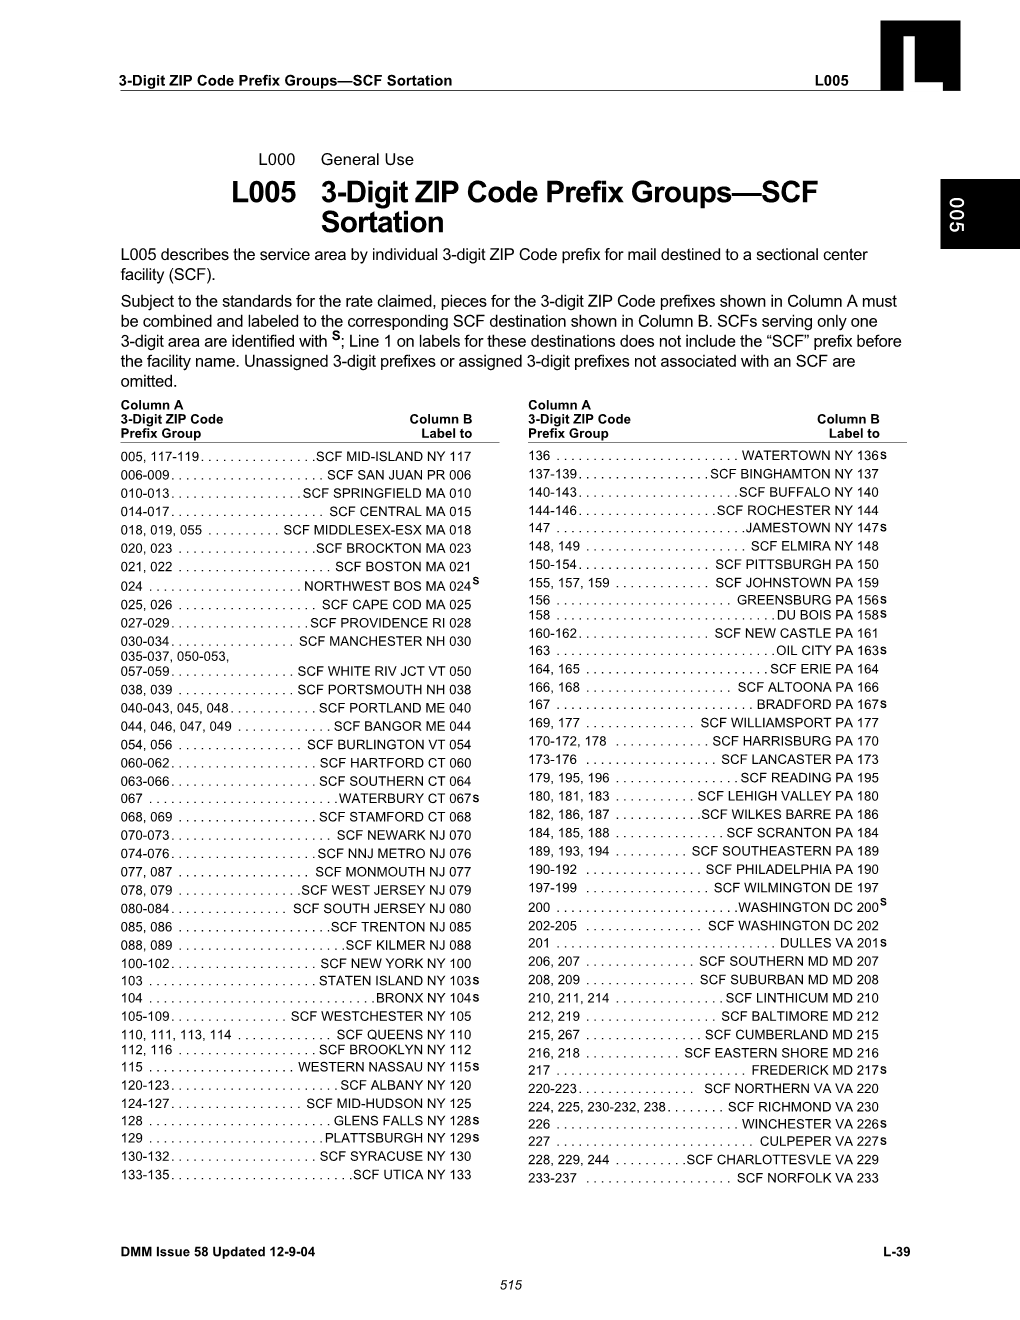 DMM L005 3-Digit ZIP Code Prefix Groups--SCF Sortation